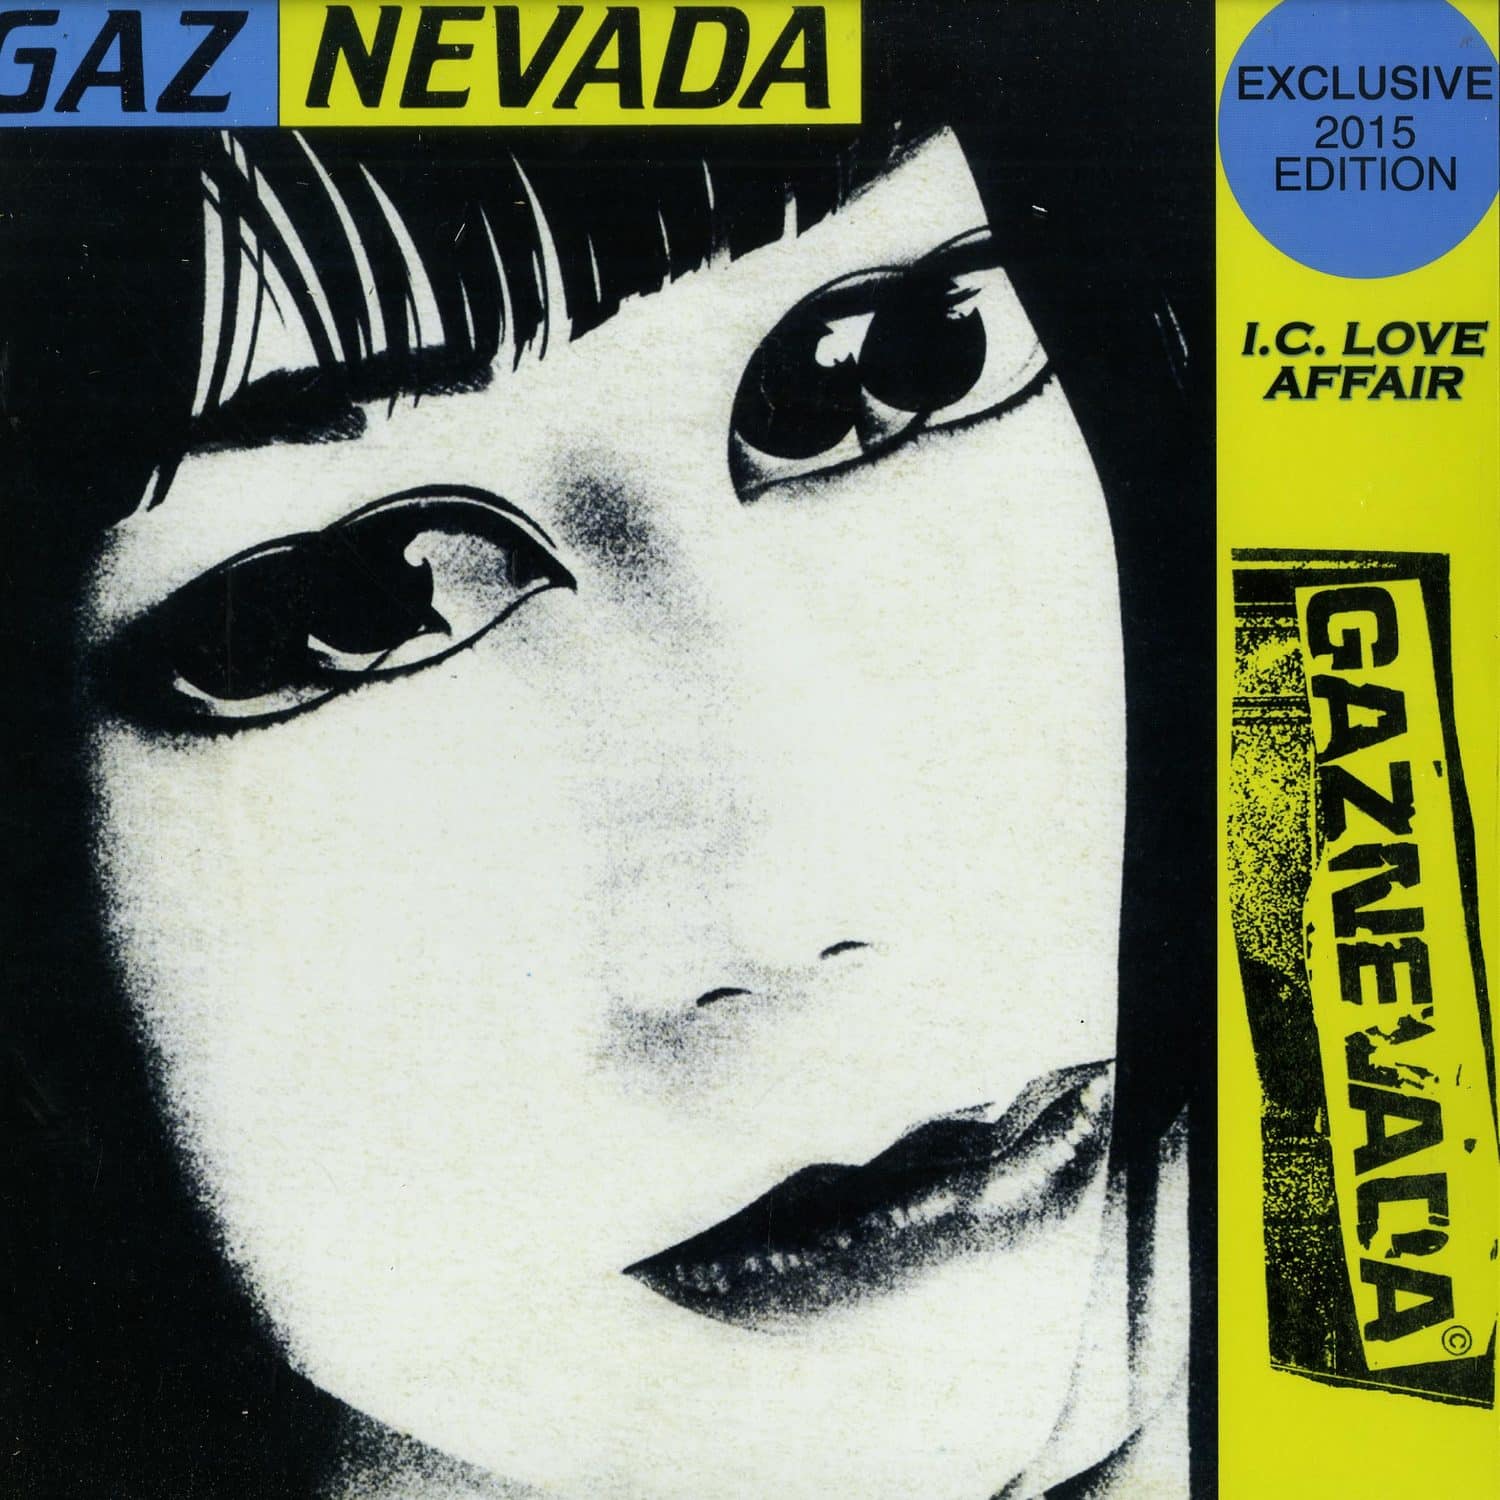 Gaznevada - I.C. LOVE AFFAIR EXCLUSIVE 2015 EDITION